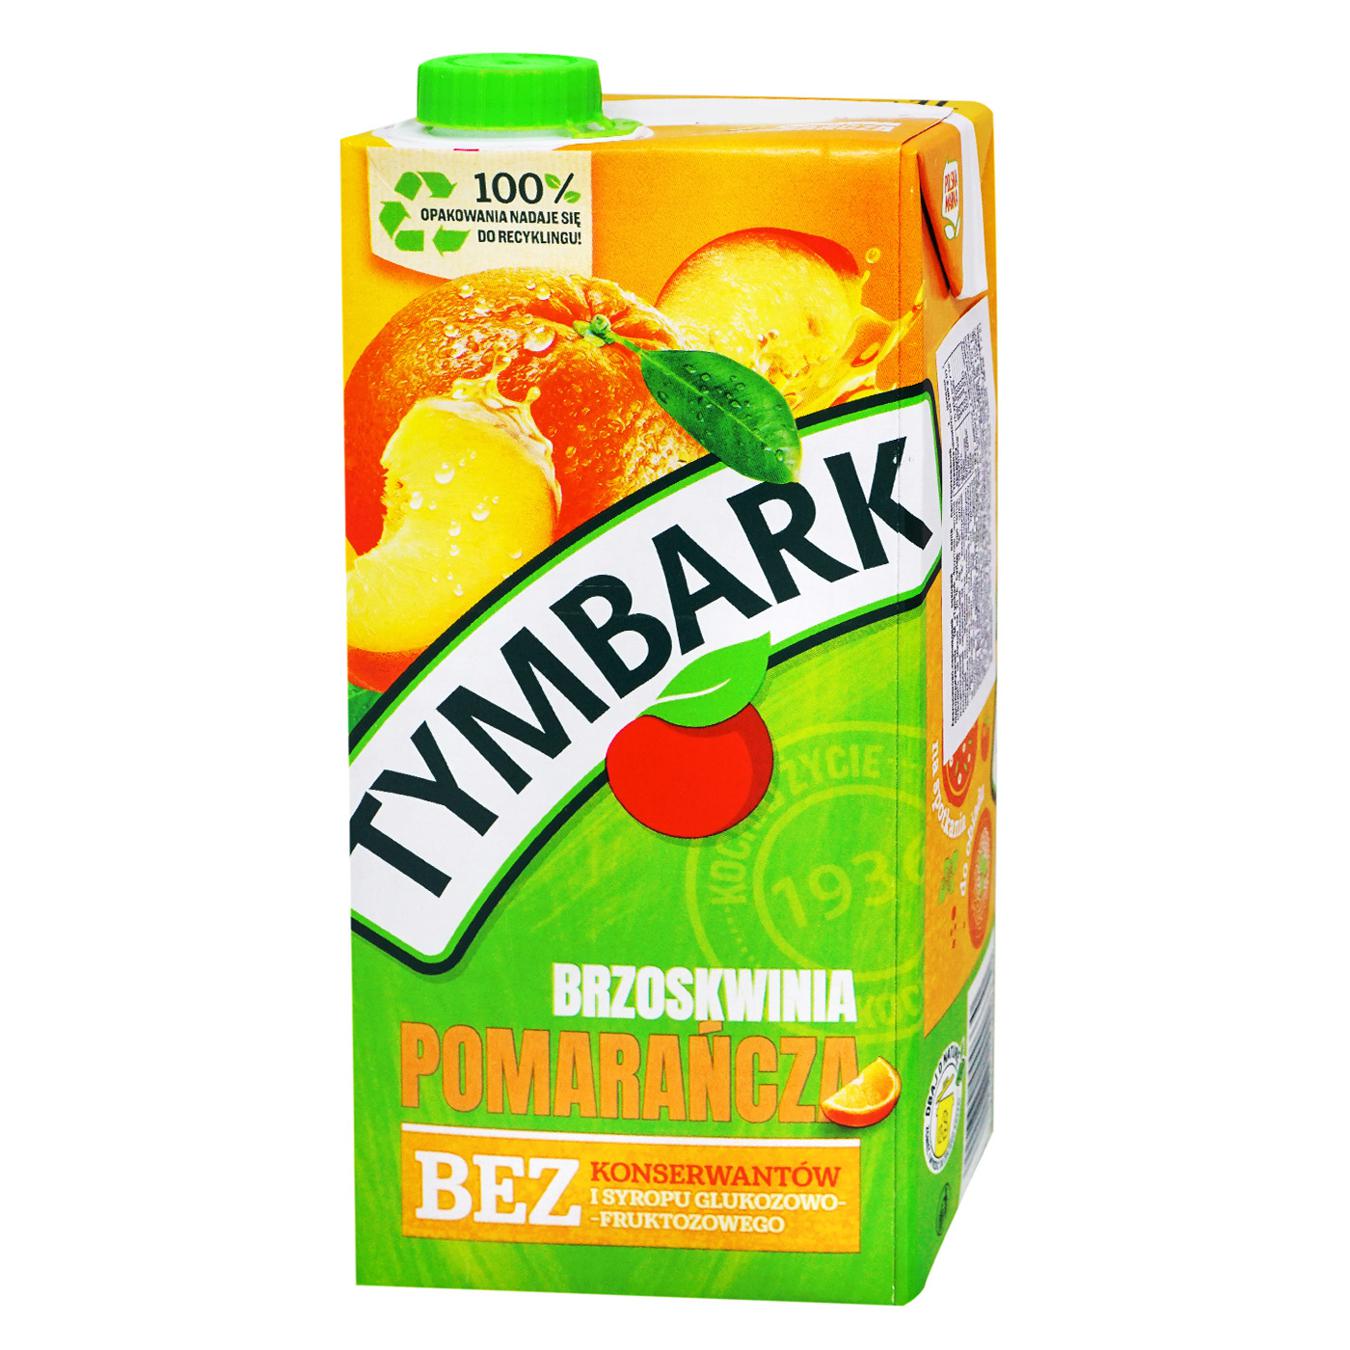 Drink Tymbark orange, peach 1l